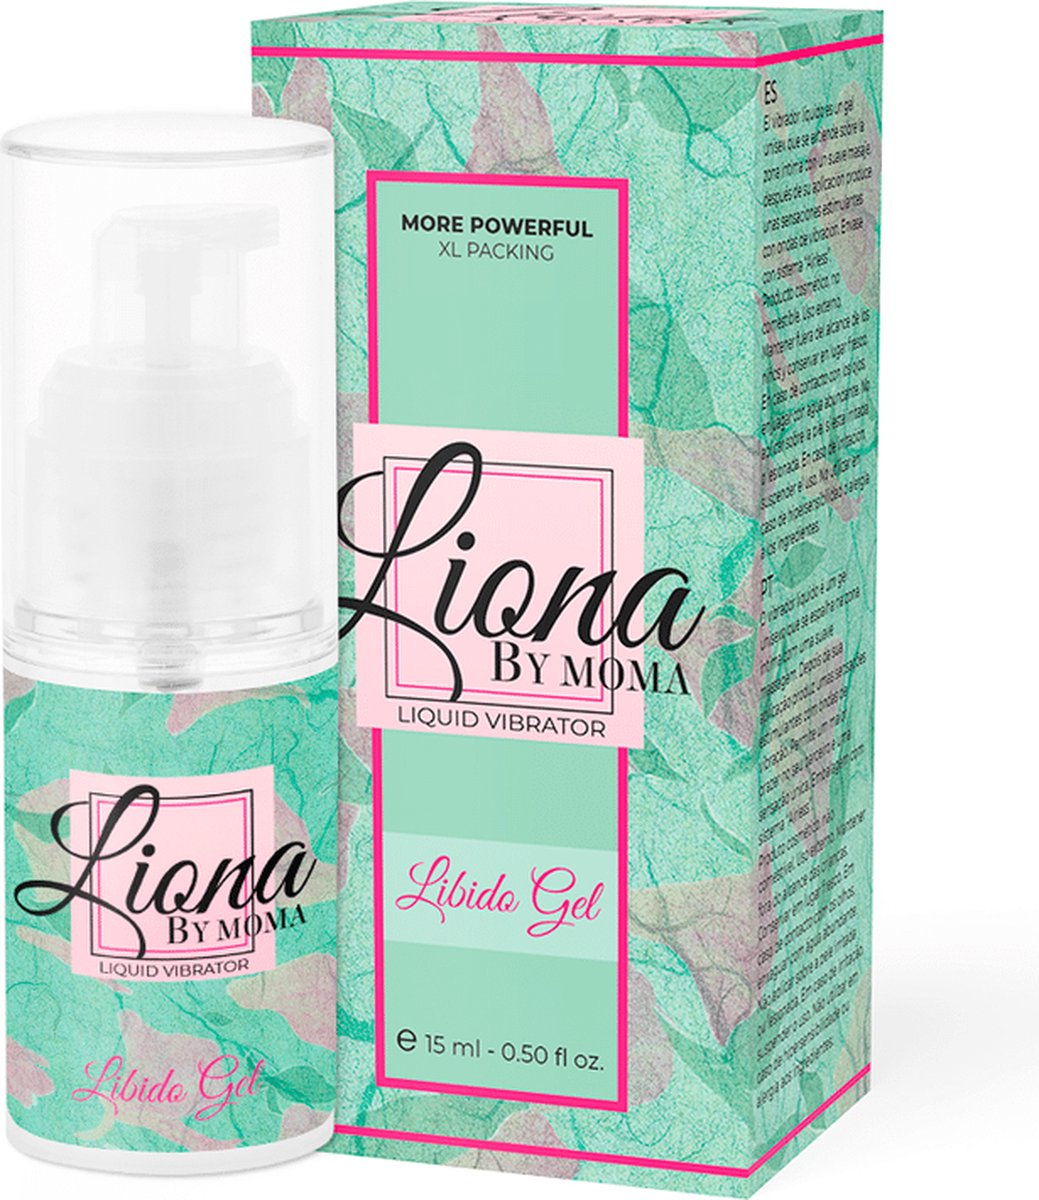 Liona By Moma - Stimulerend Middel - Liquid Vibrator - Libido Gel - 15ml